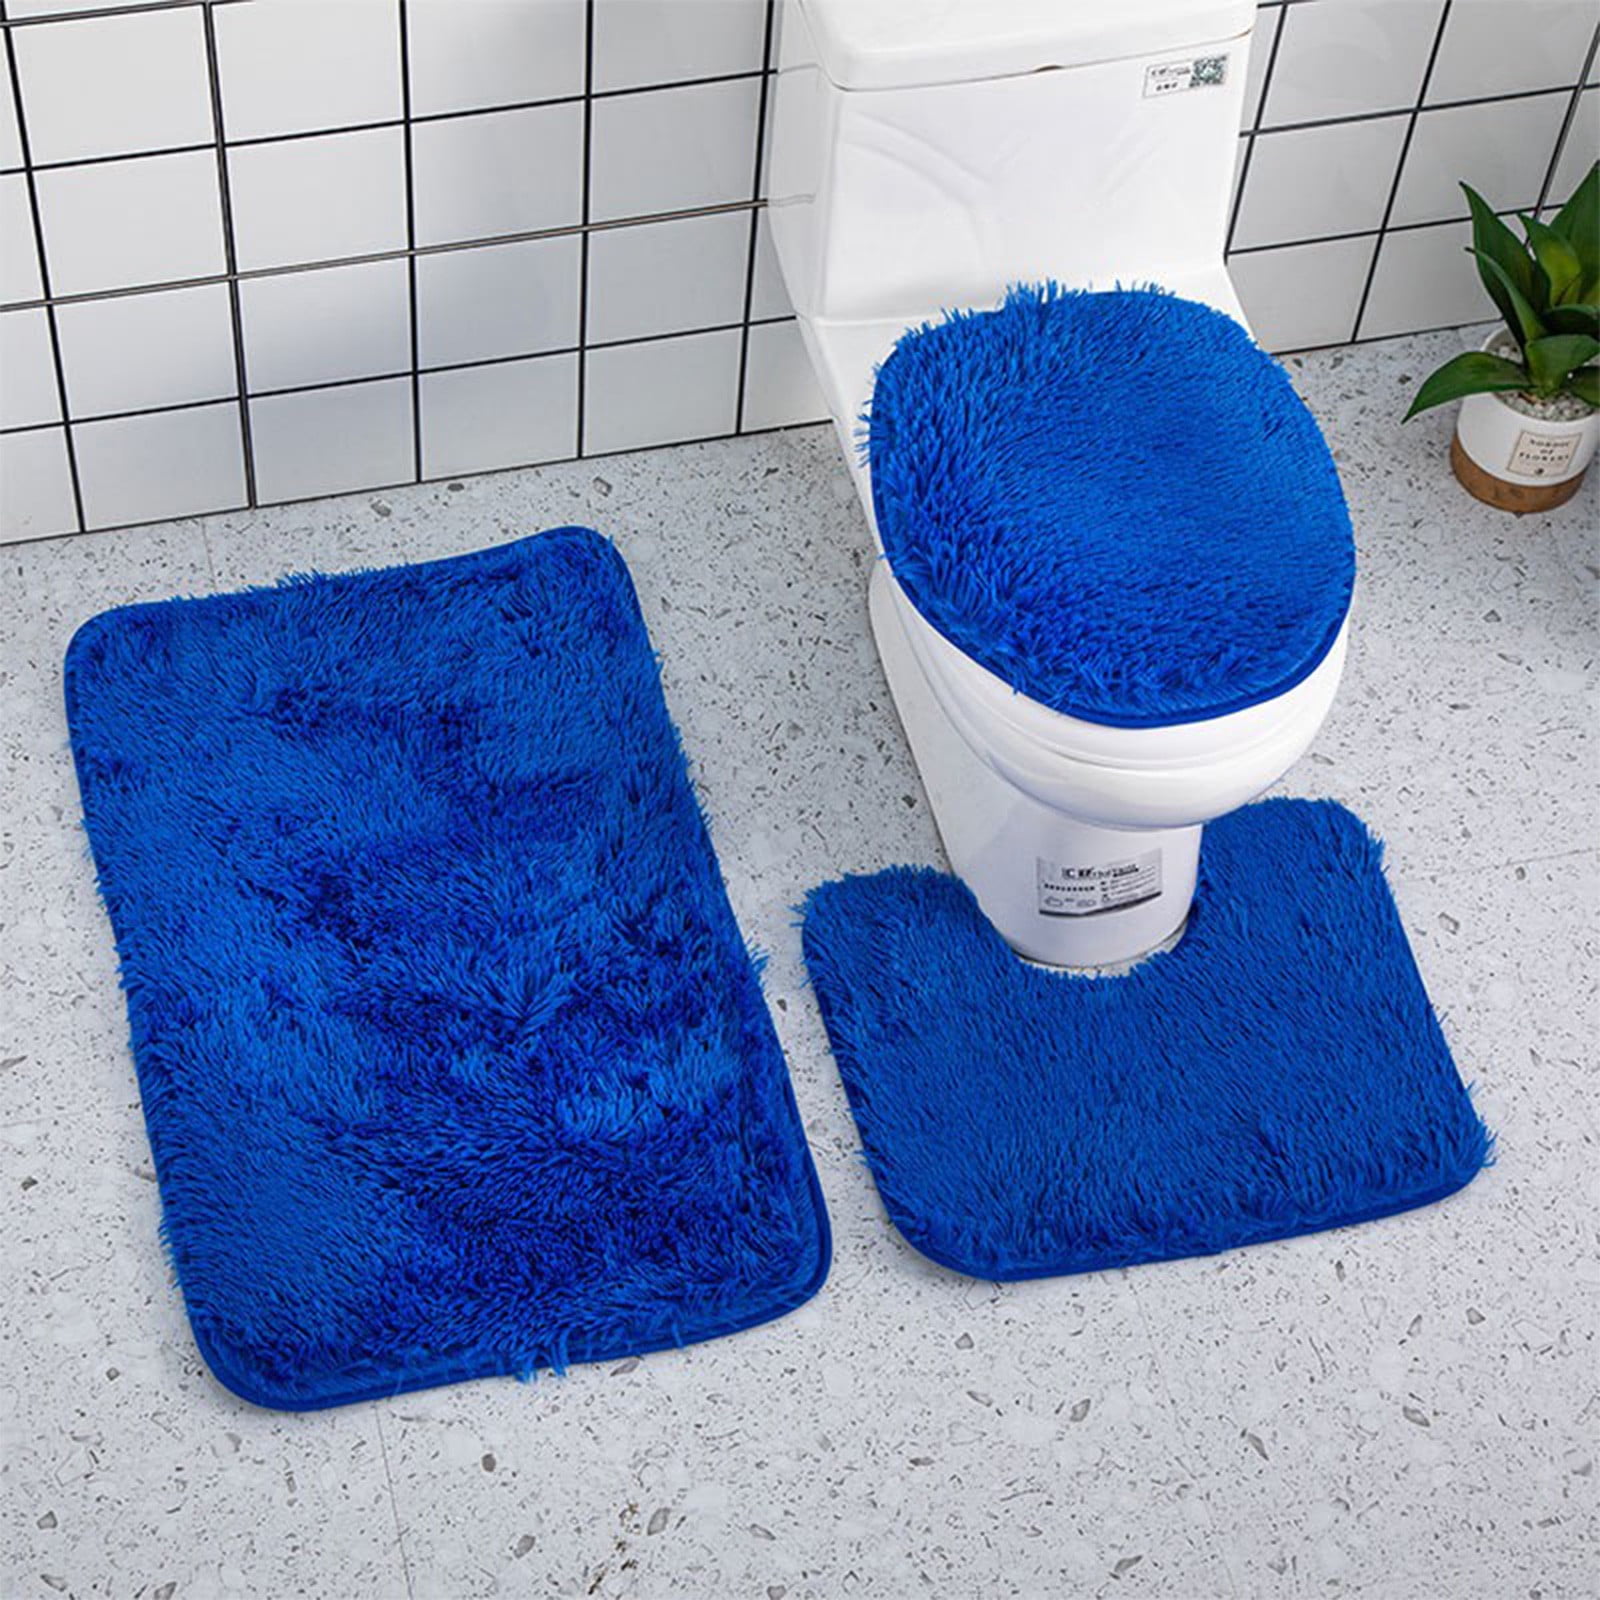 Wsbdenlk Clearance Rugs Household Supplies Solid Color 3 Piece Bathroom Rug Set Bathroom Toilet Carpet Anti-Slip Mat Solid Color Bathroom Toilet Floor